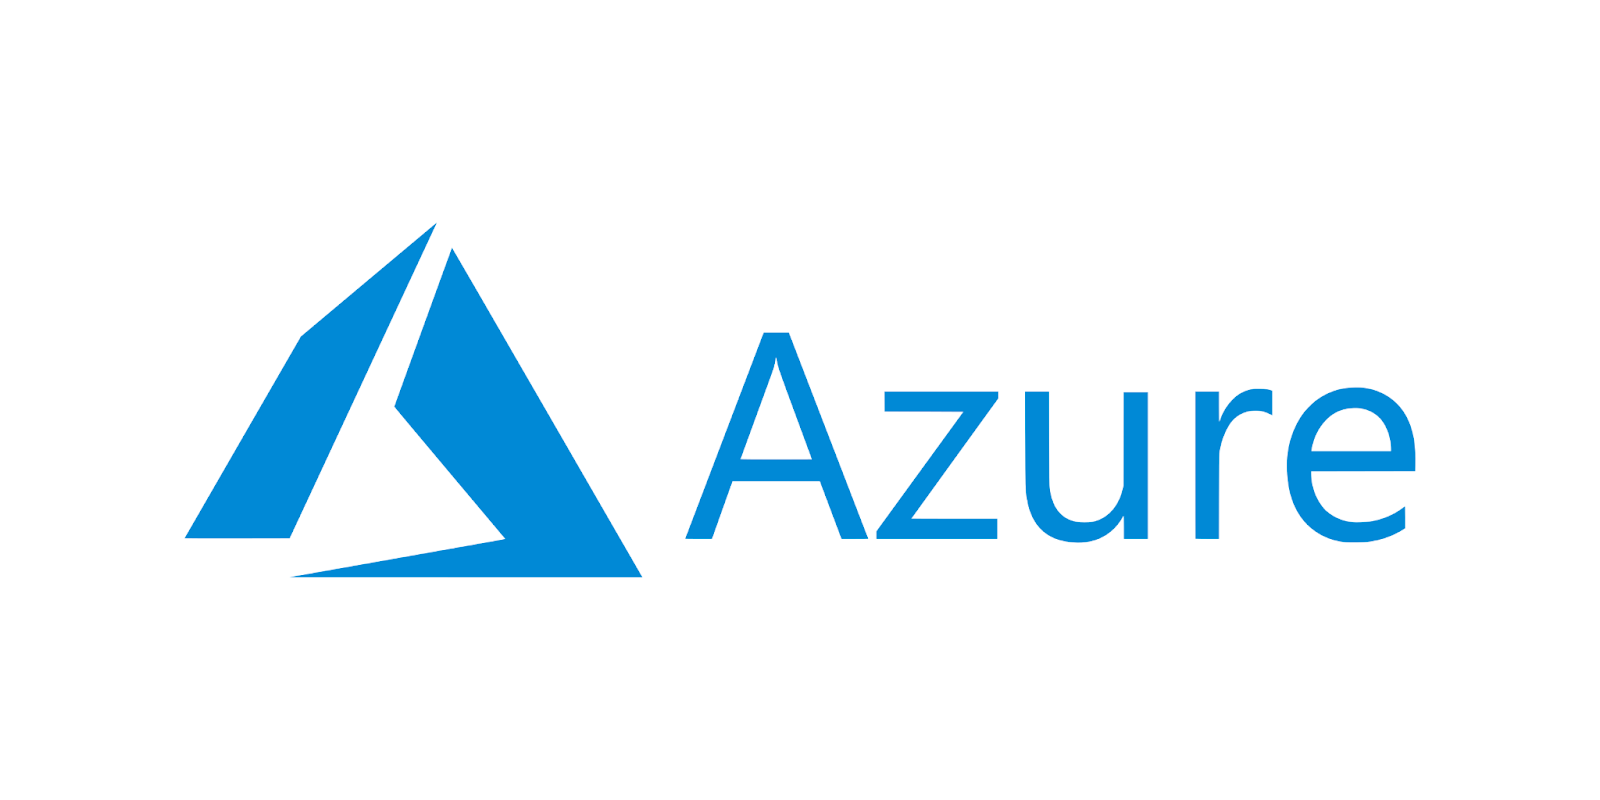 Microsoft Azure..